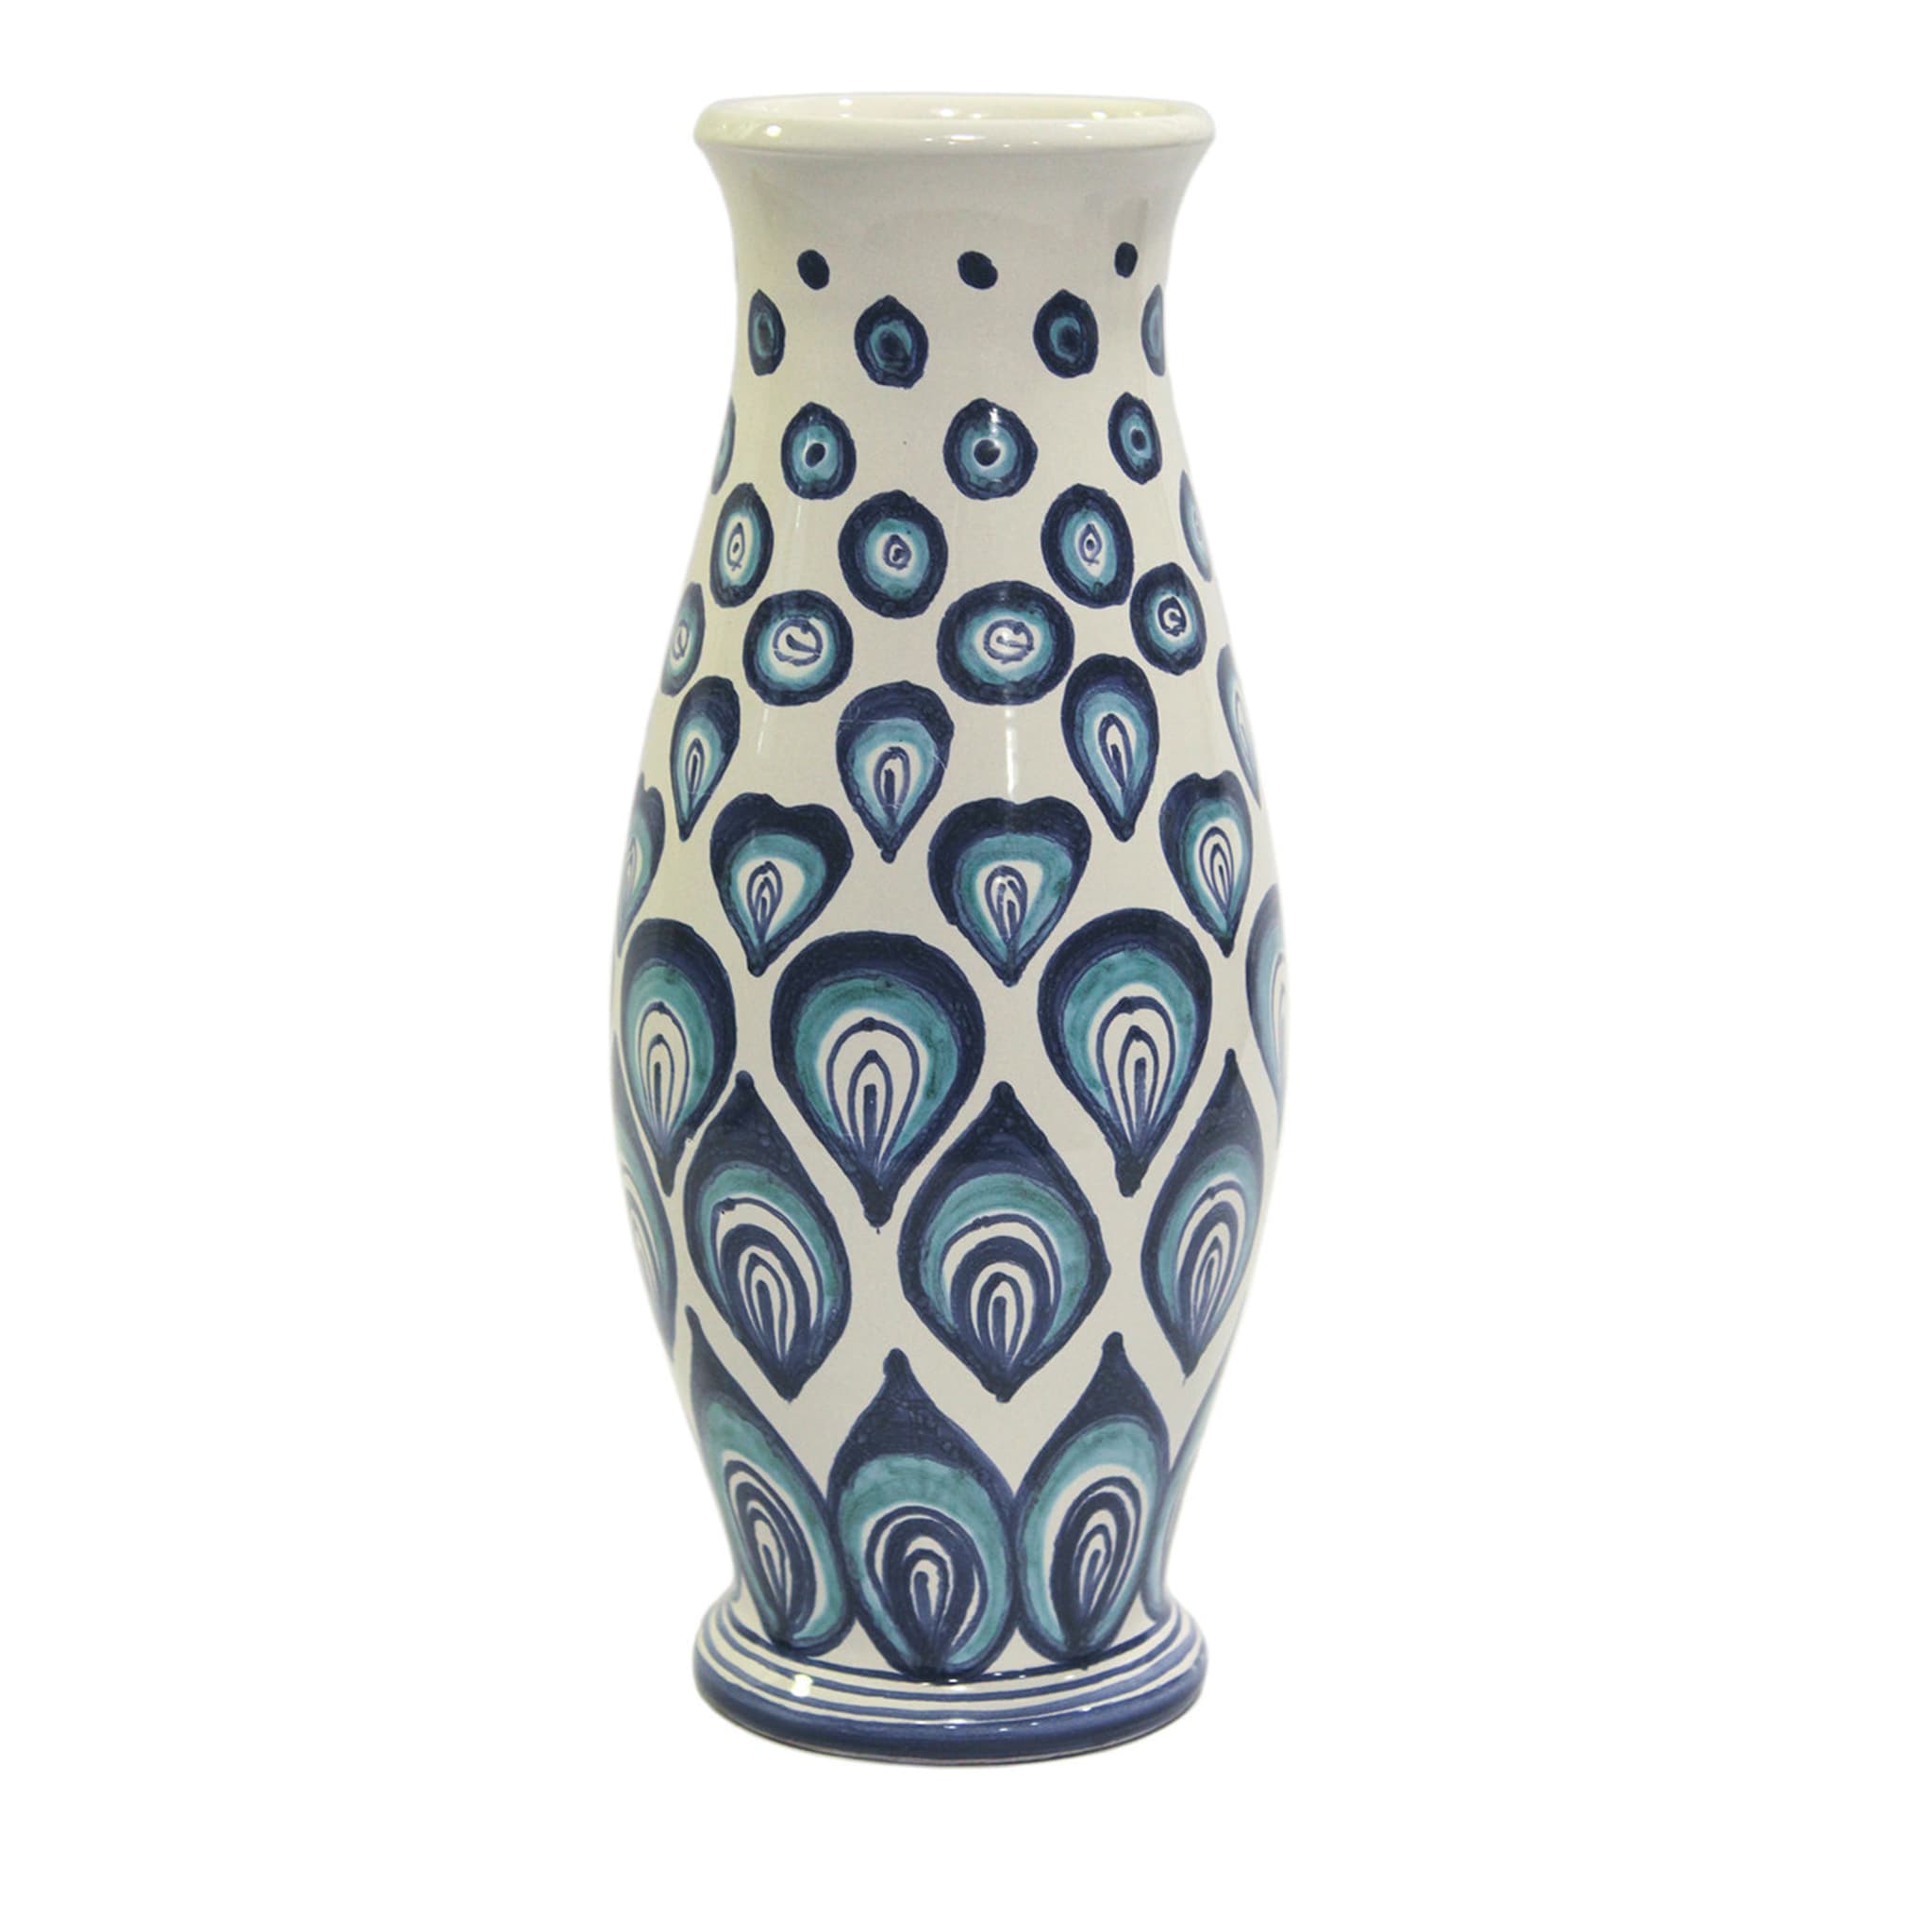 Chini a Cuore Vase by Lorenza Adami - Main view